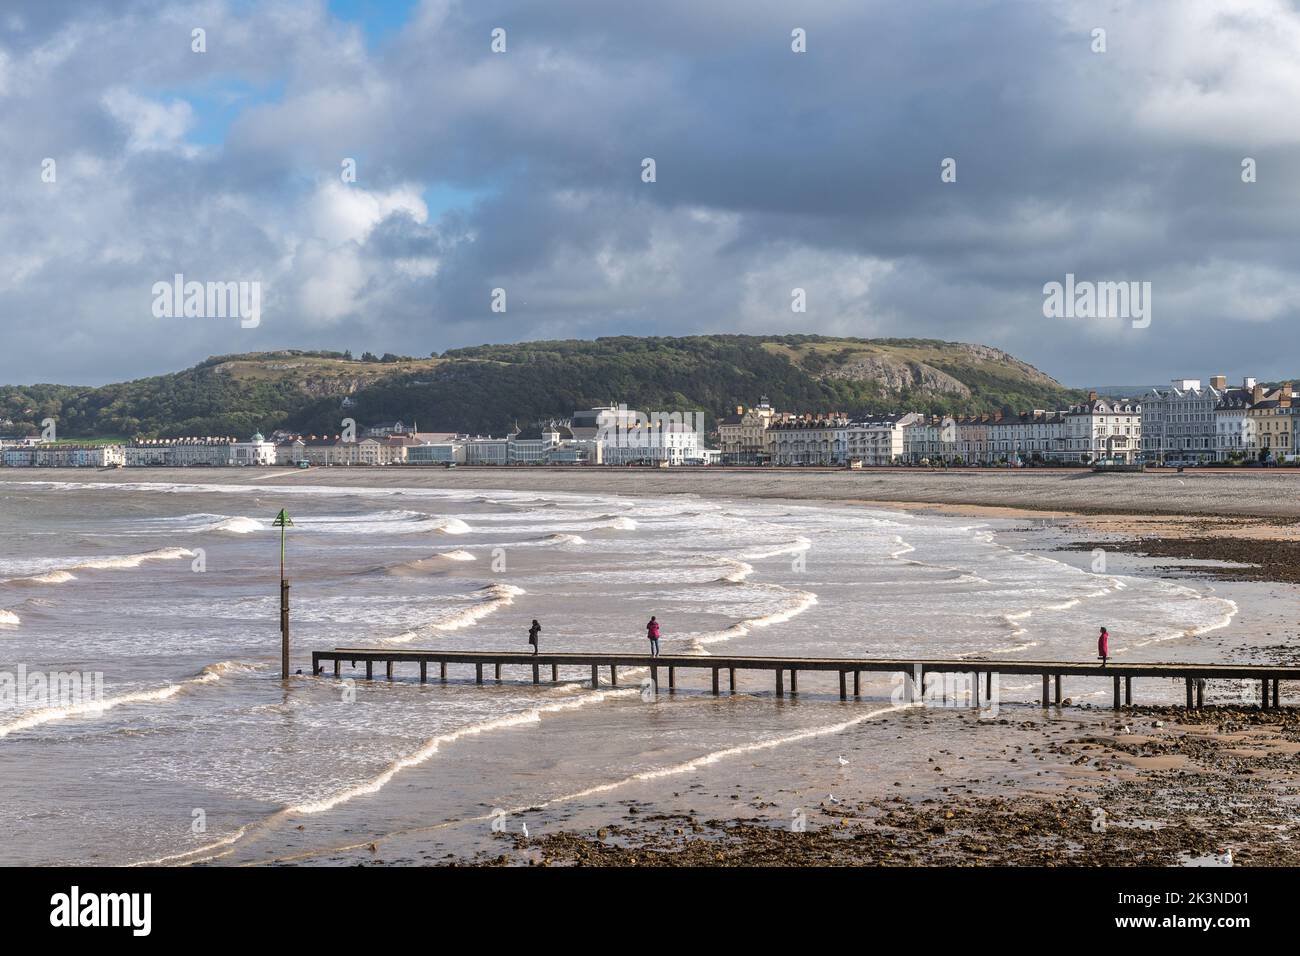 Jetty, beach and sea front in Llandudno, North Wales, UK. Stock Photo